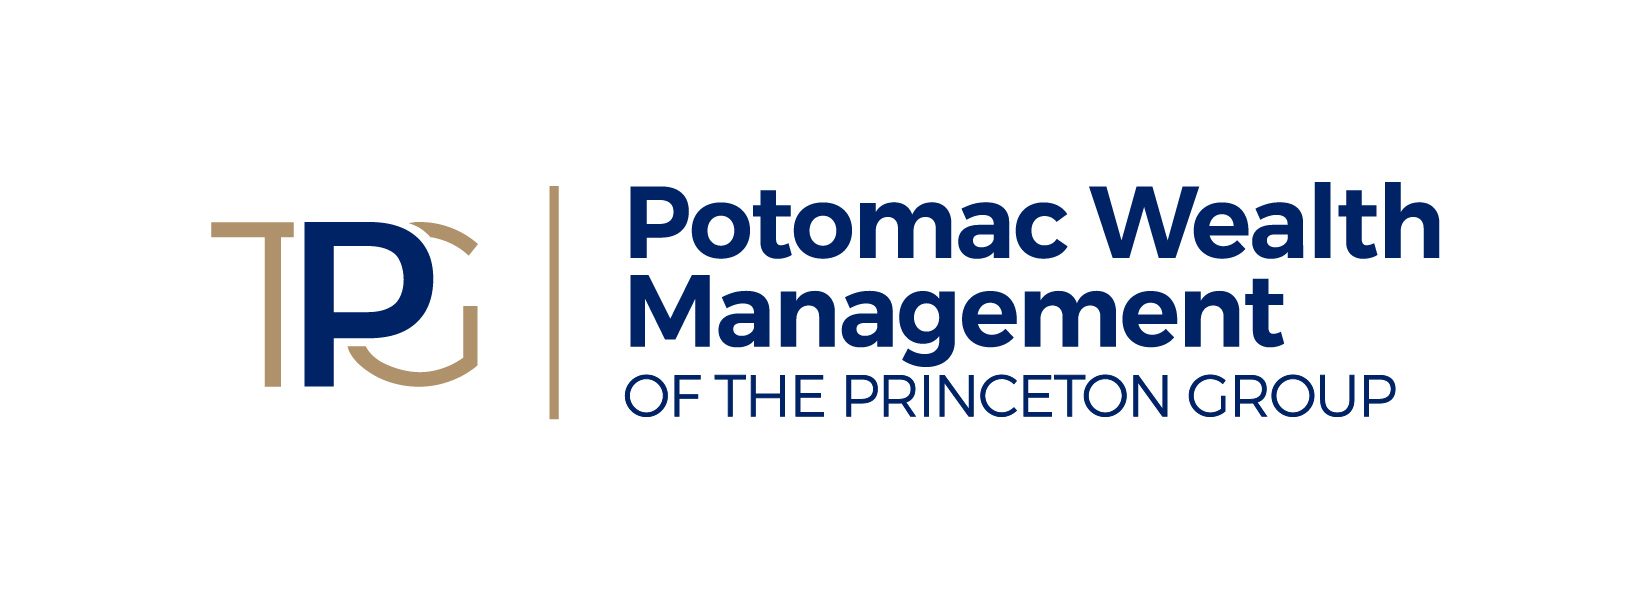 WFA-PG-3379_Sub-Brand logos-Potomac.jpg